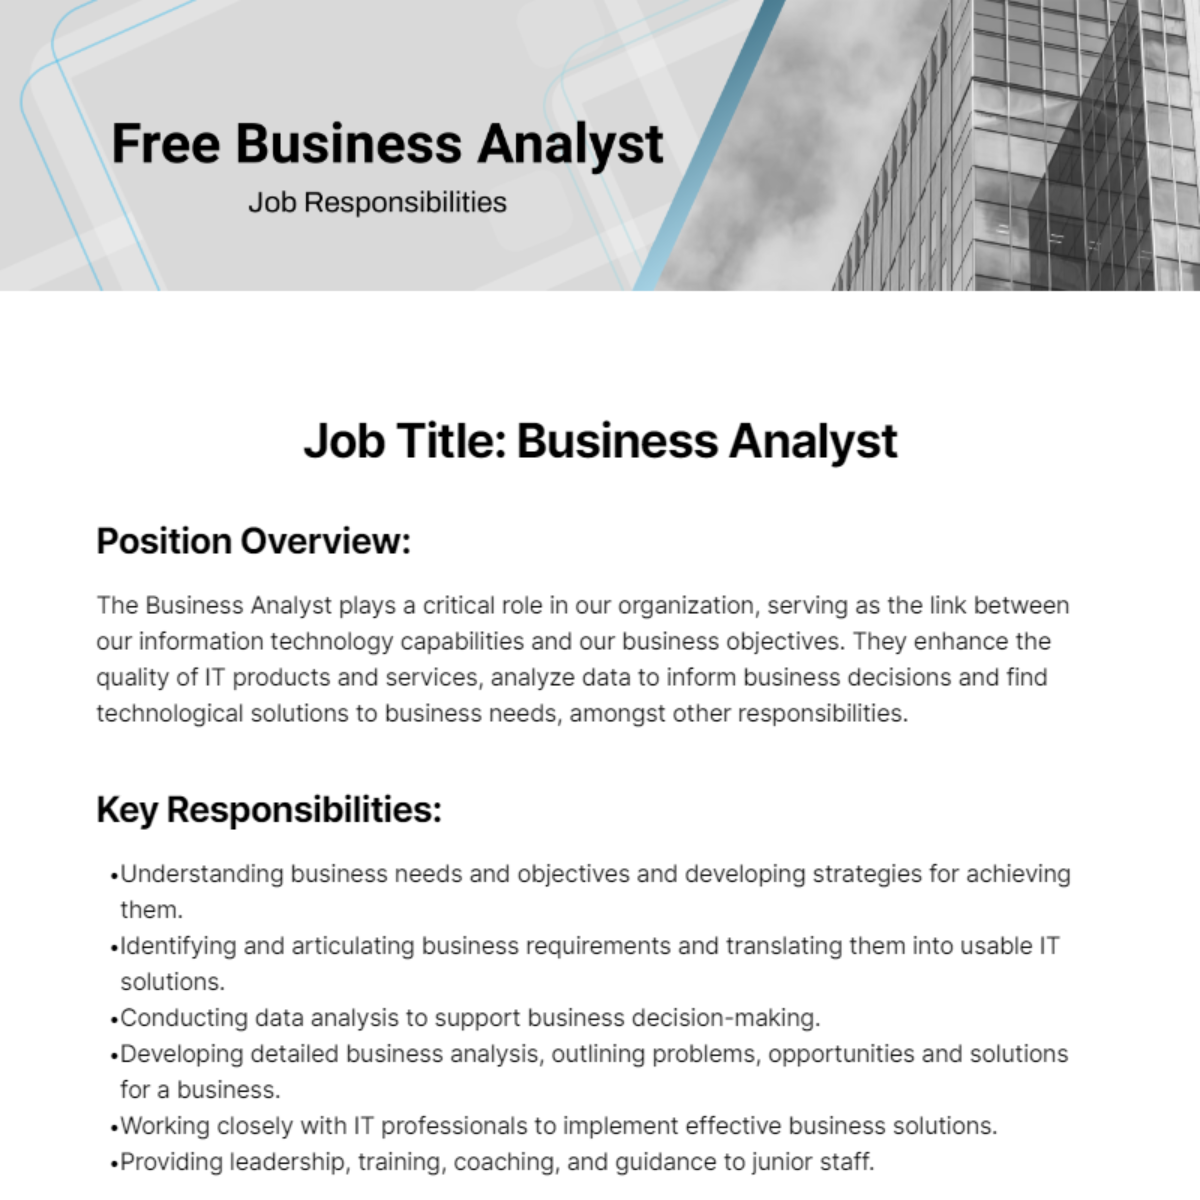 Free Business Analyst Job Responsibilities Template